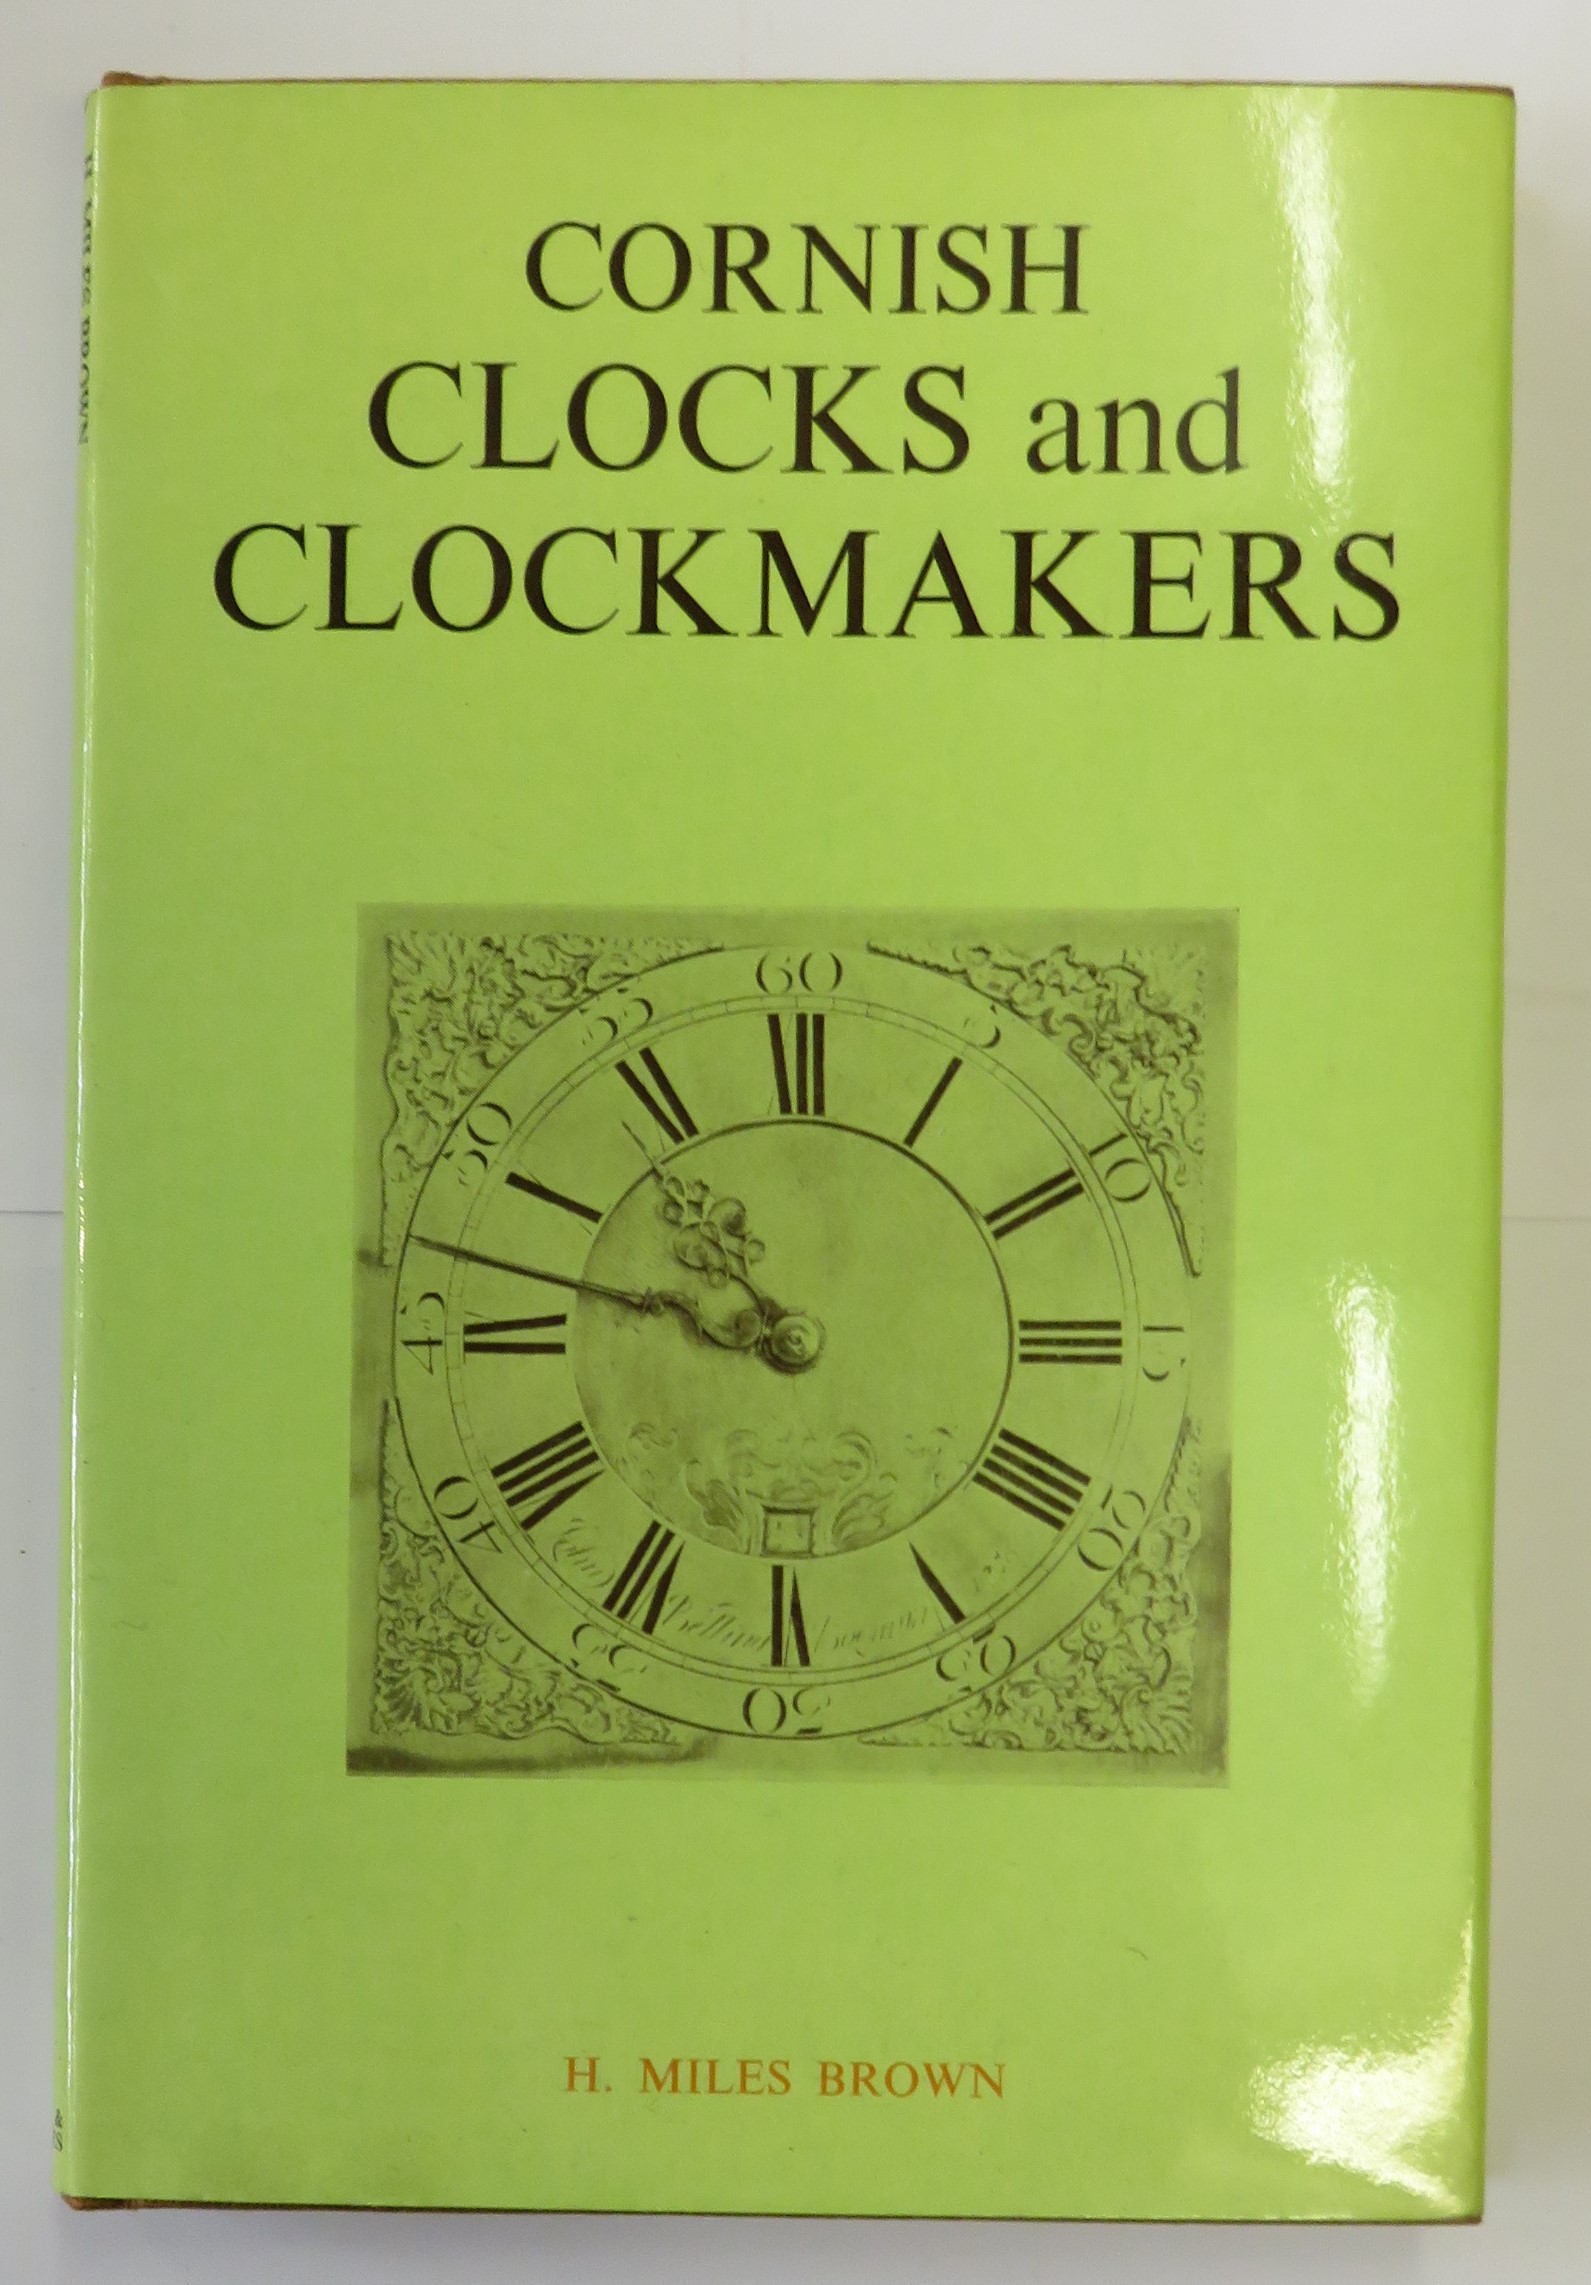 Cornish Clocks and Clockmakers